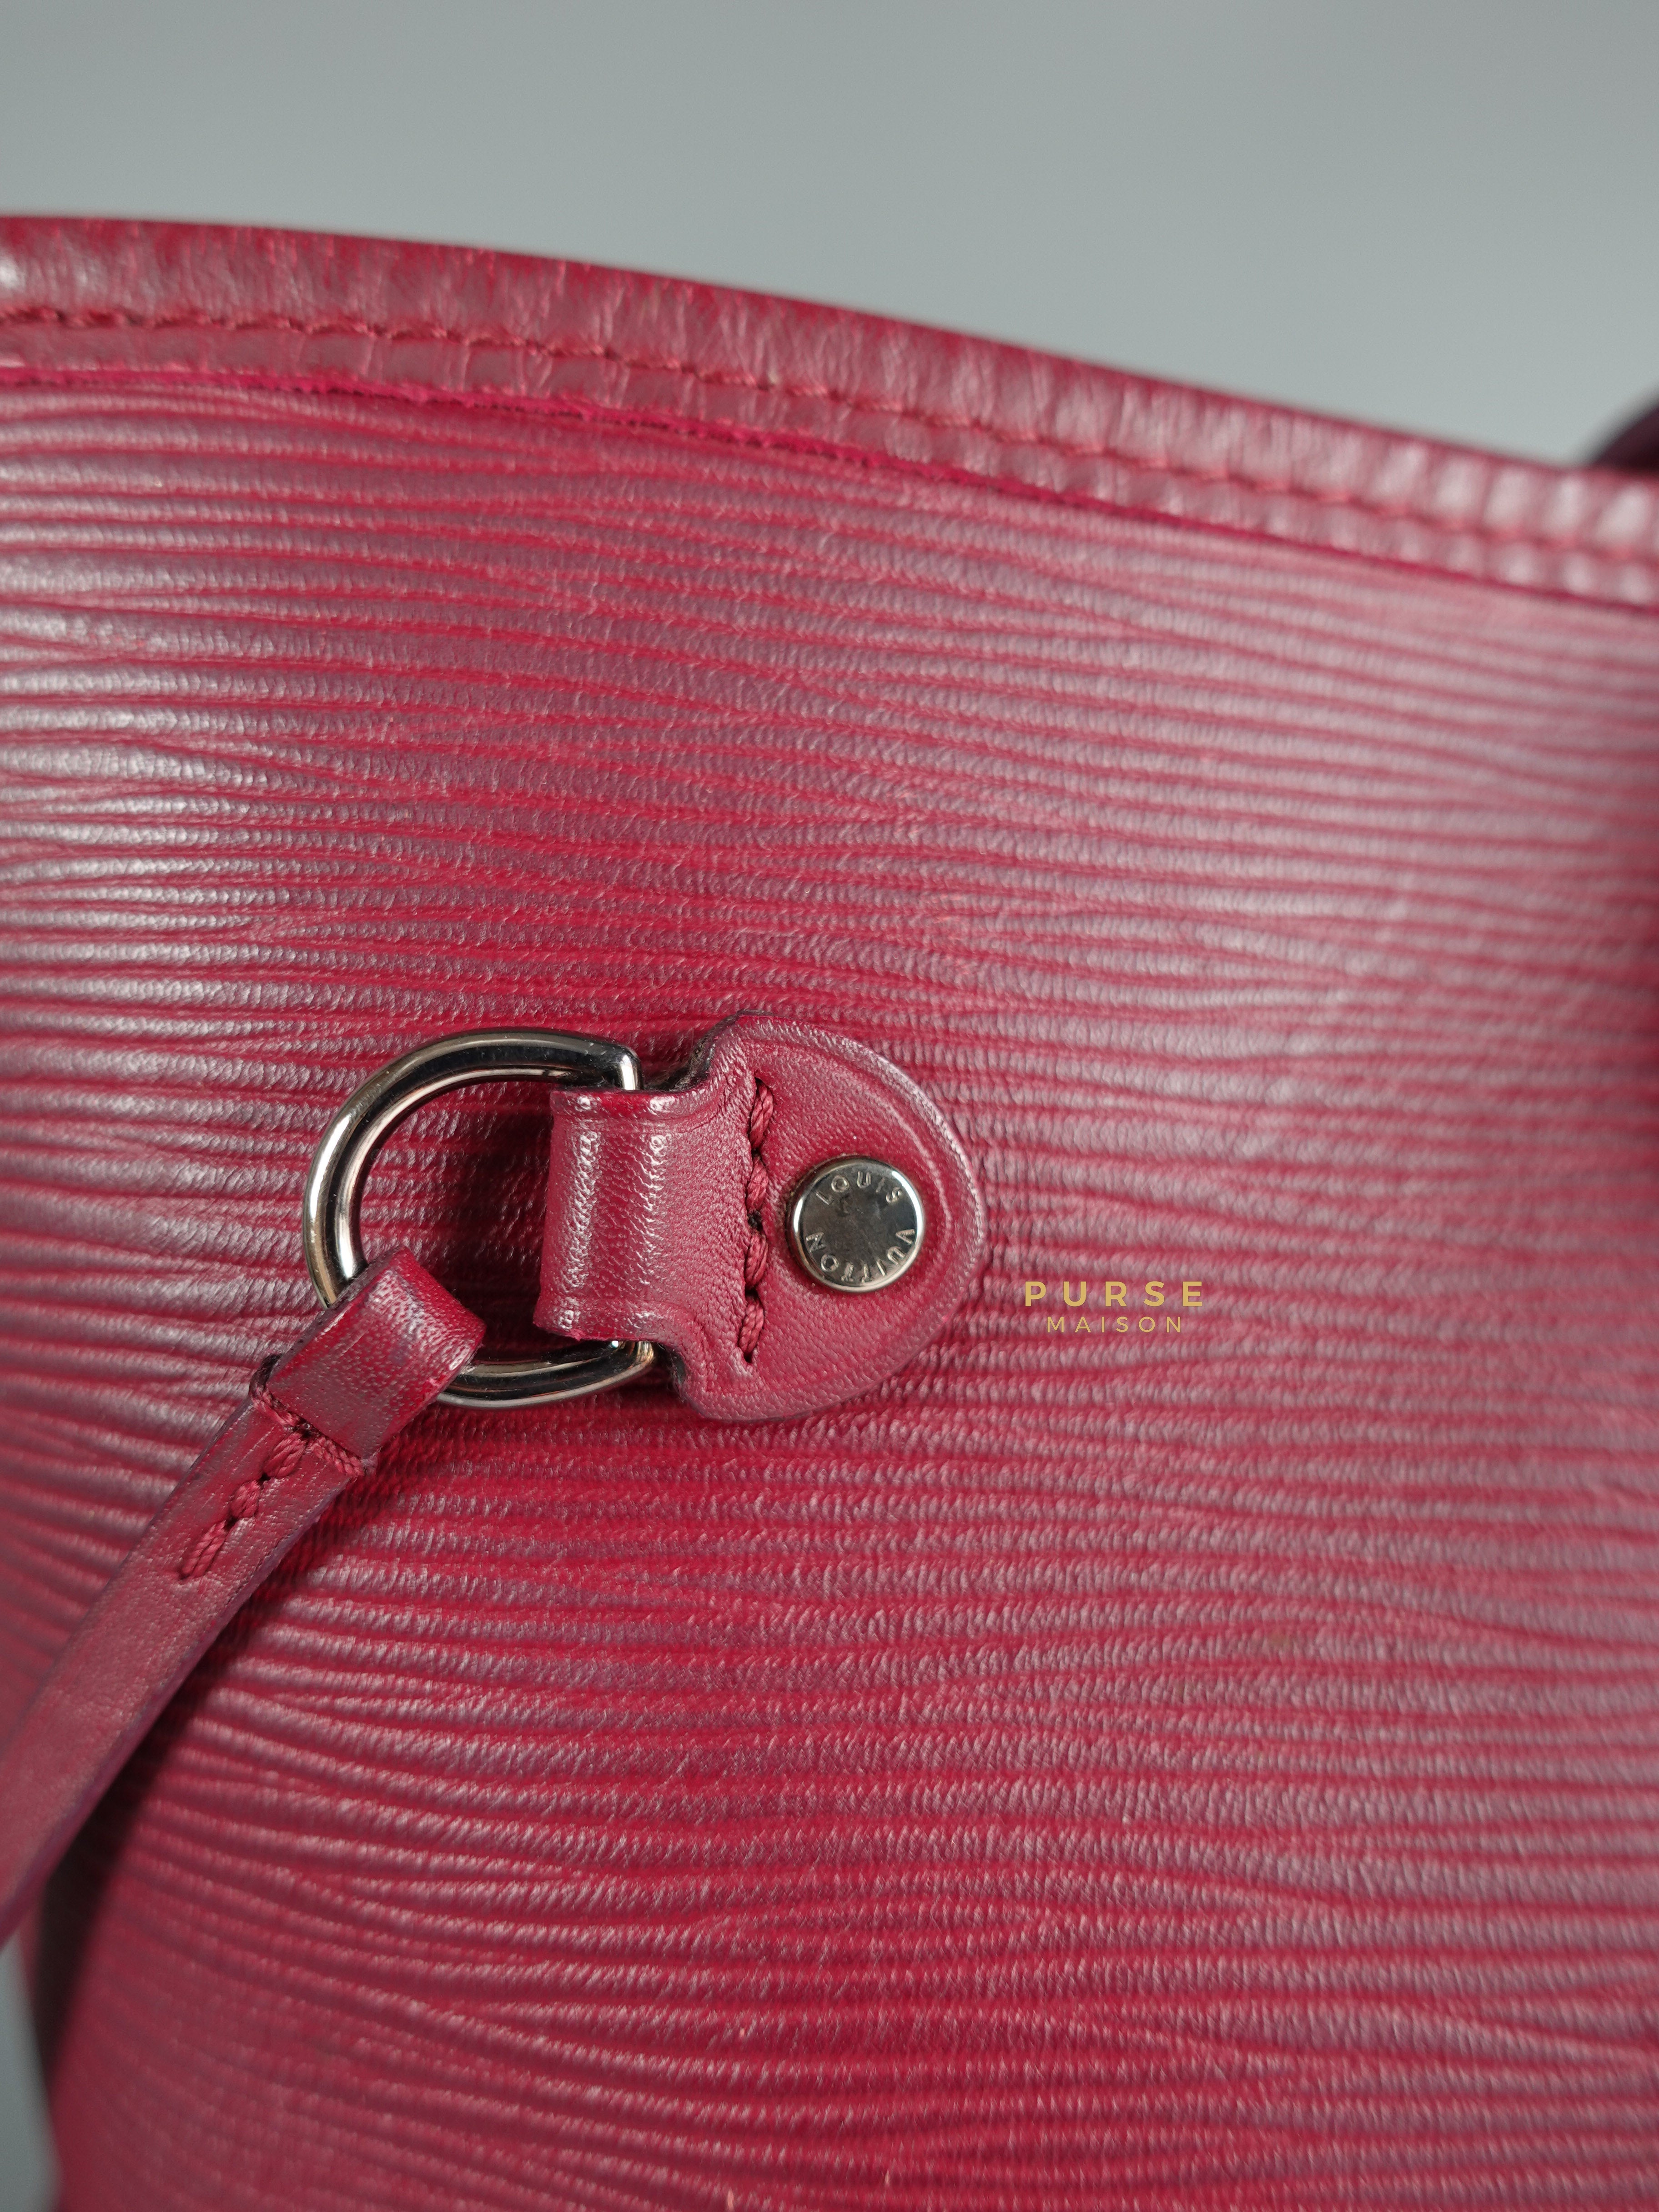 Louis Vuitton Epi Leather Neverfull Bag in Fuchsia (Date Code: FL2133) | Purse Maison Luxury Bags Shop